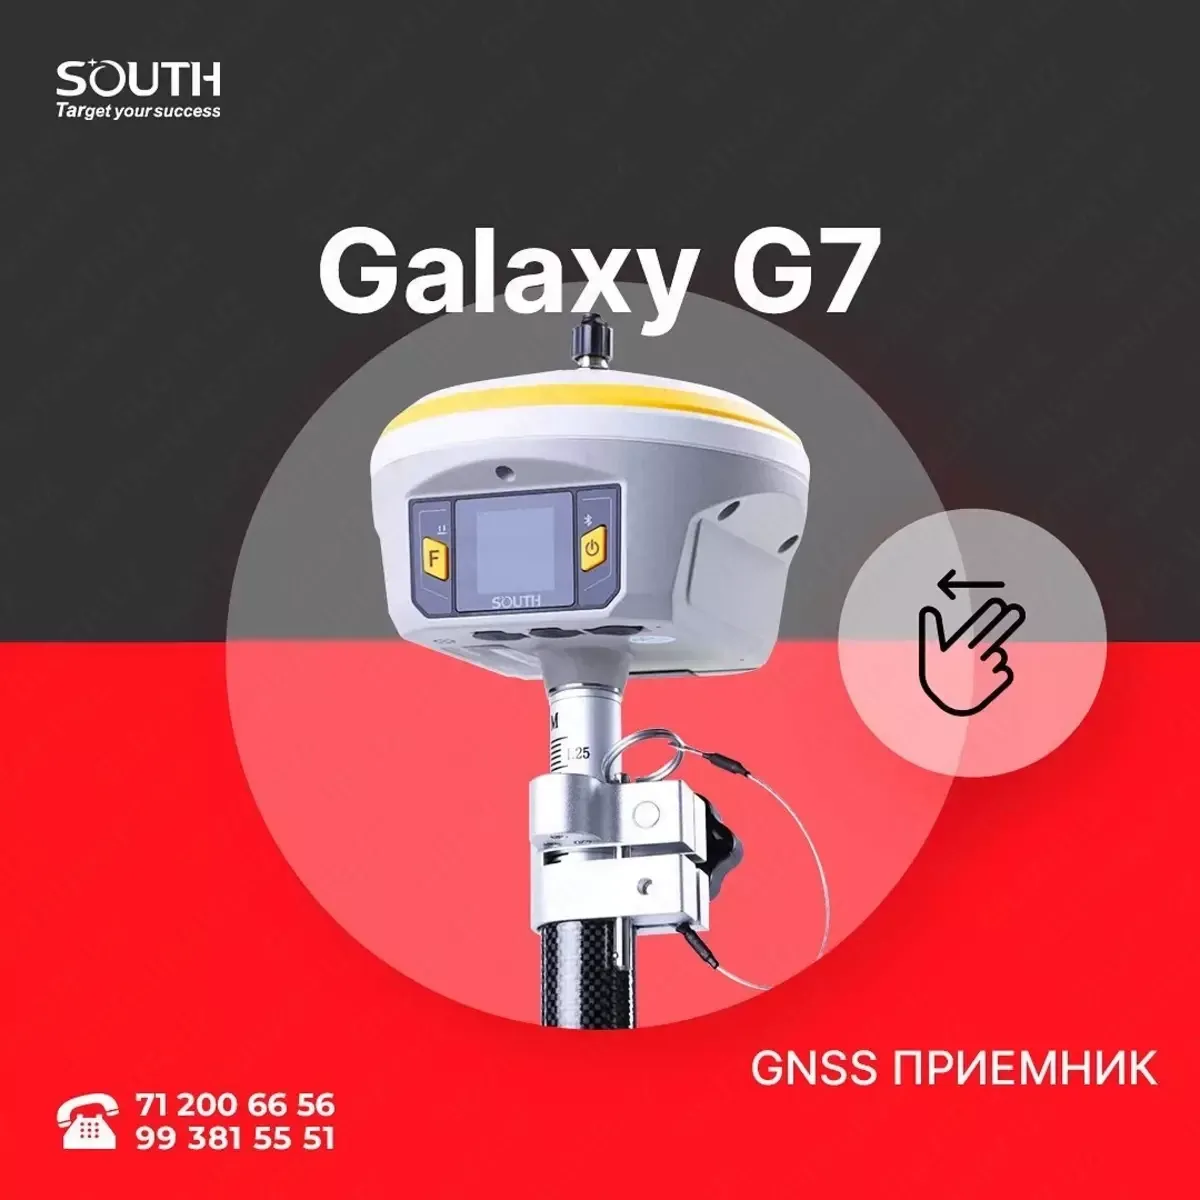 GNSS приемник SOUTH GALAXY G7#1